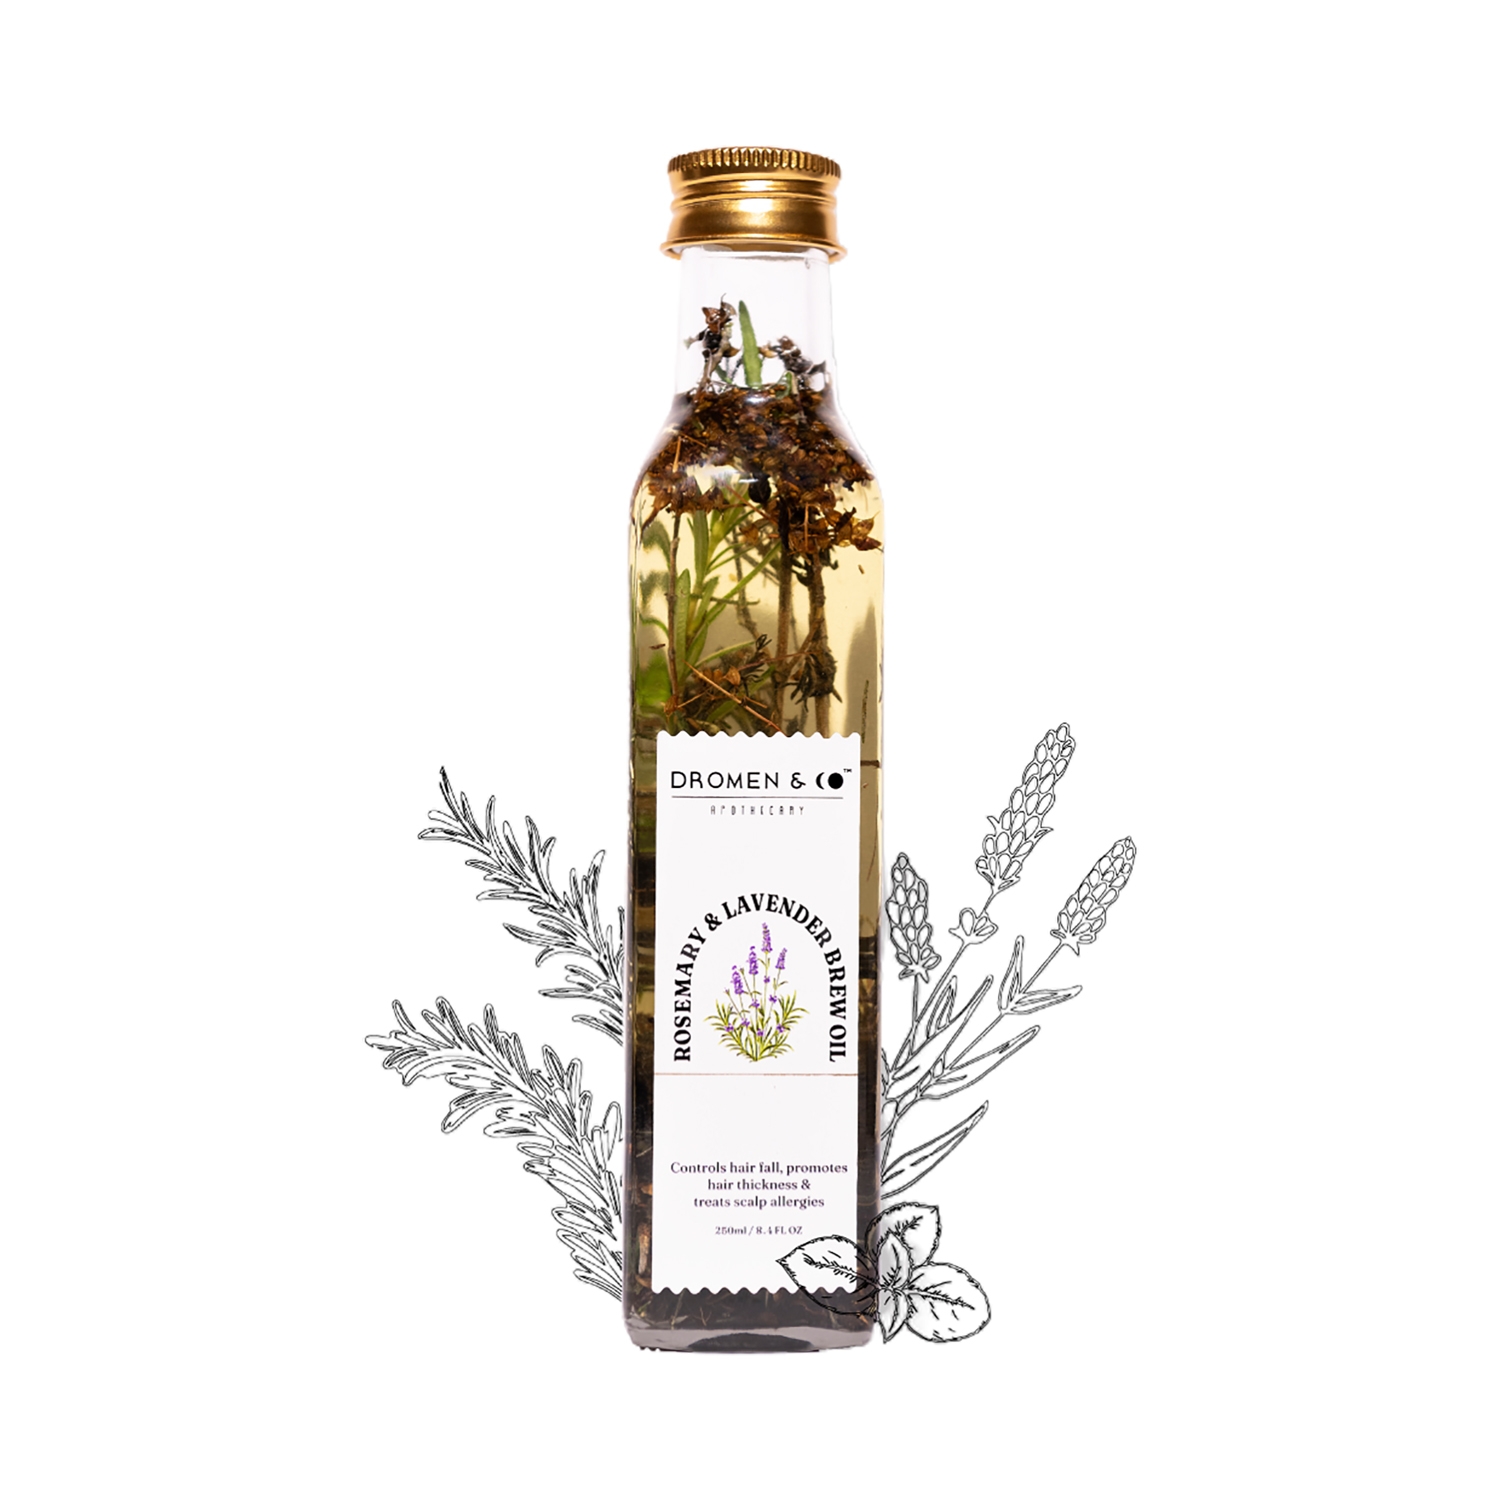 DROMEN & CO | DROMEN & CO Rosemary & Lavender Brew Oil For Hair Growth & Hair Fall Control (250ml)